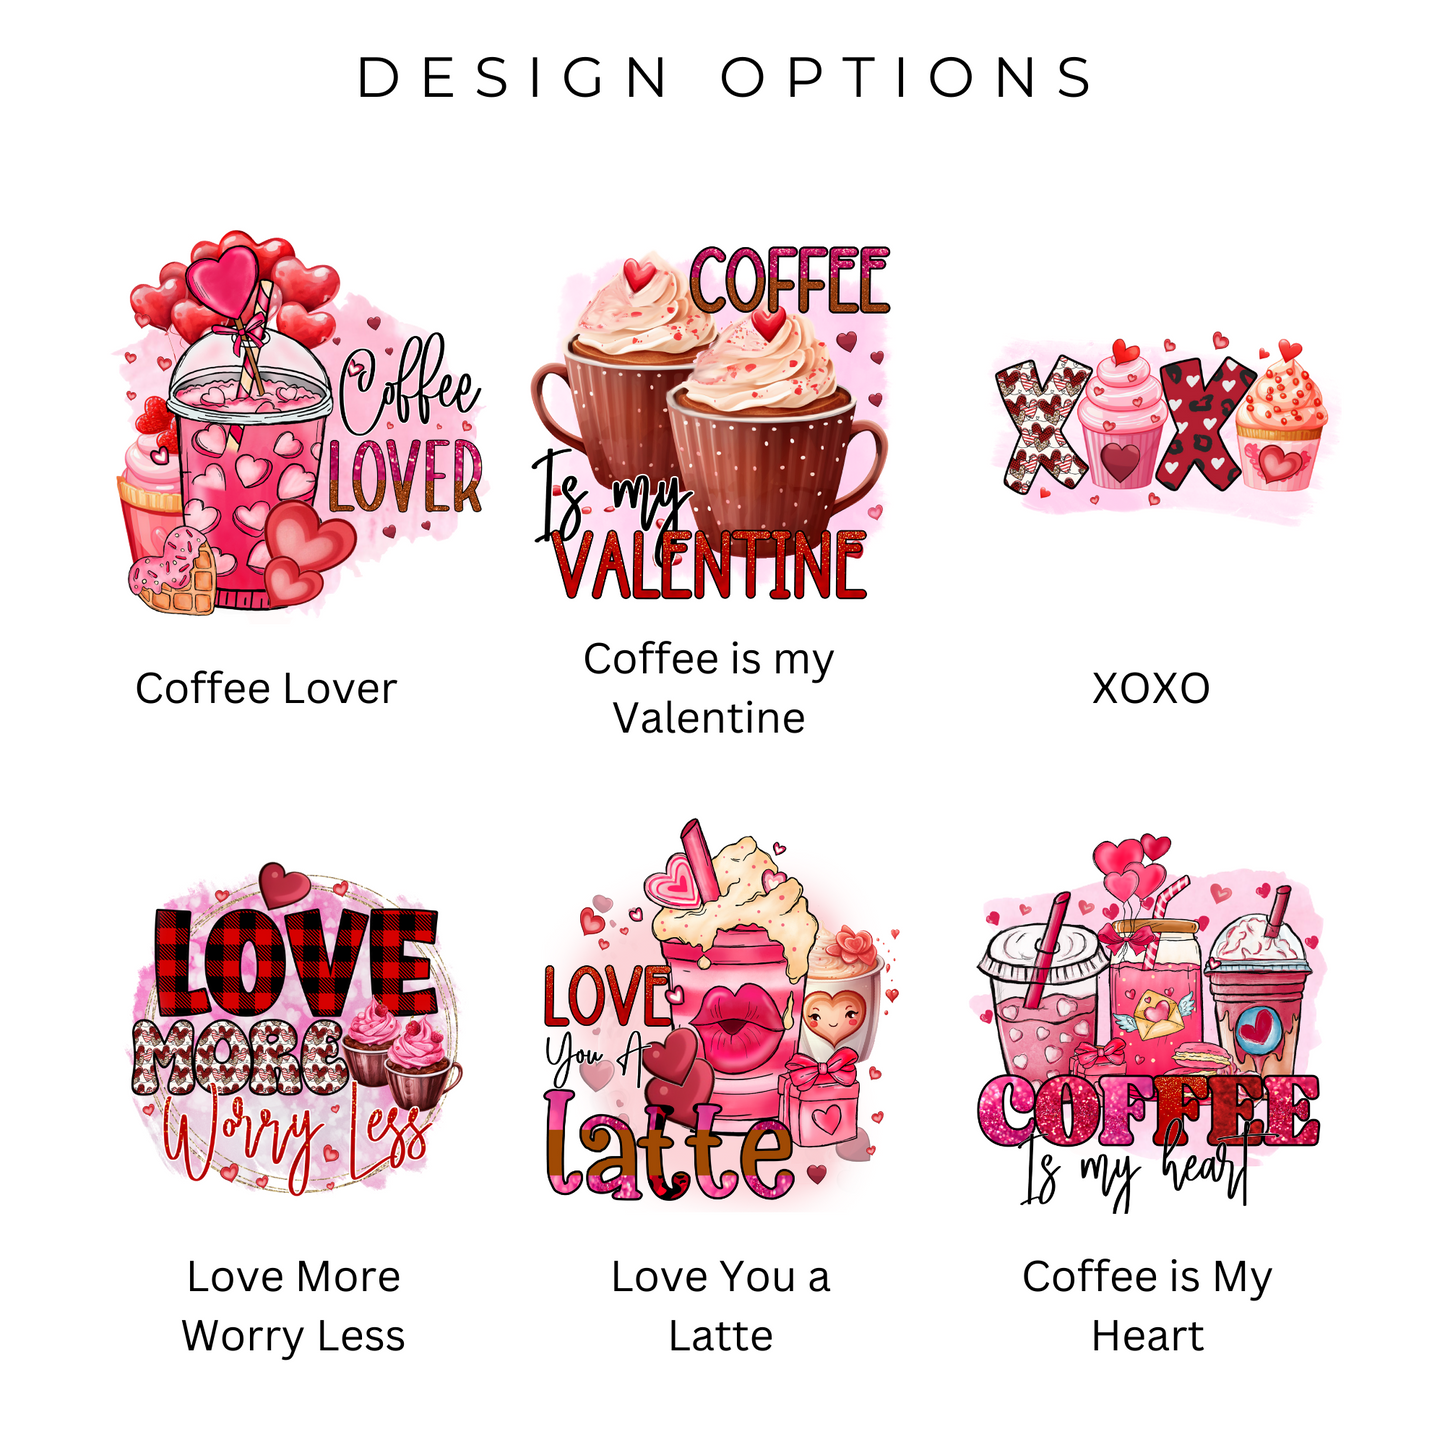 Coffee Lover's Mug 11oz Valentine's Day Edition